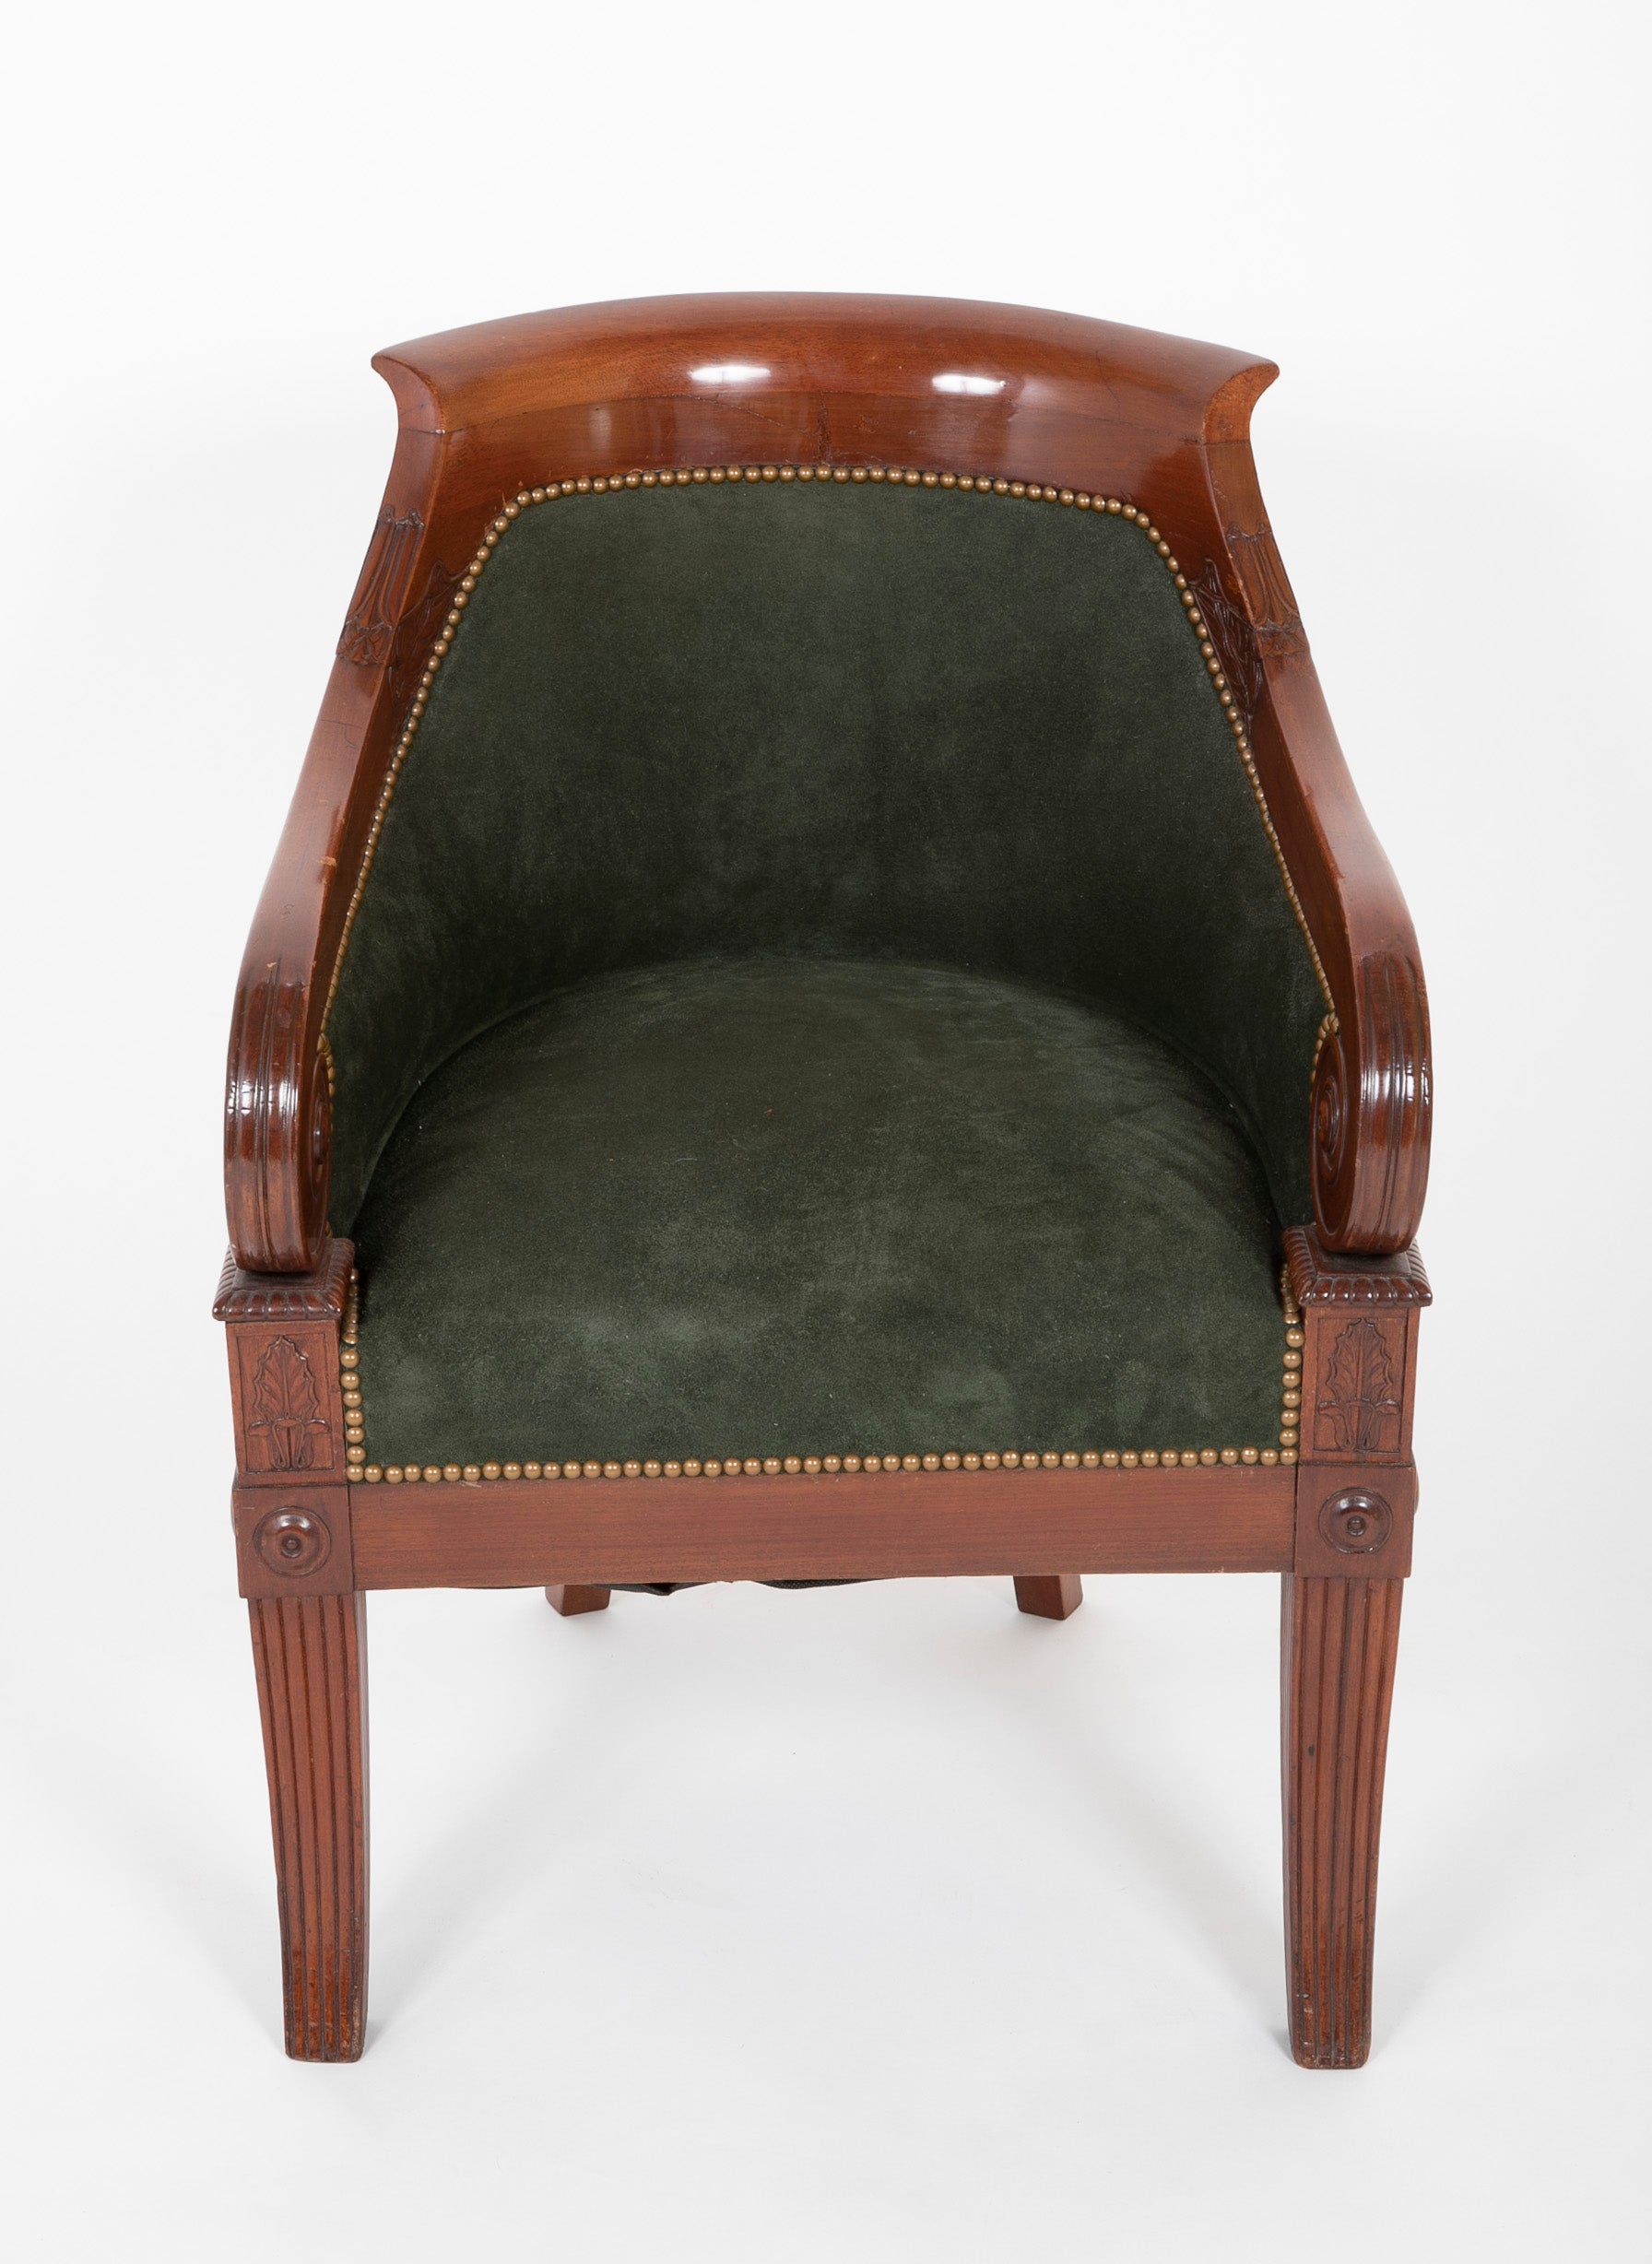 A French Mahogany Empire Chair